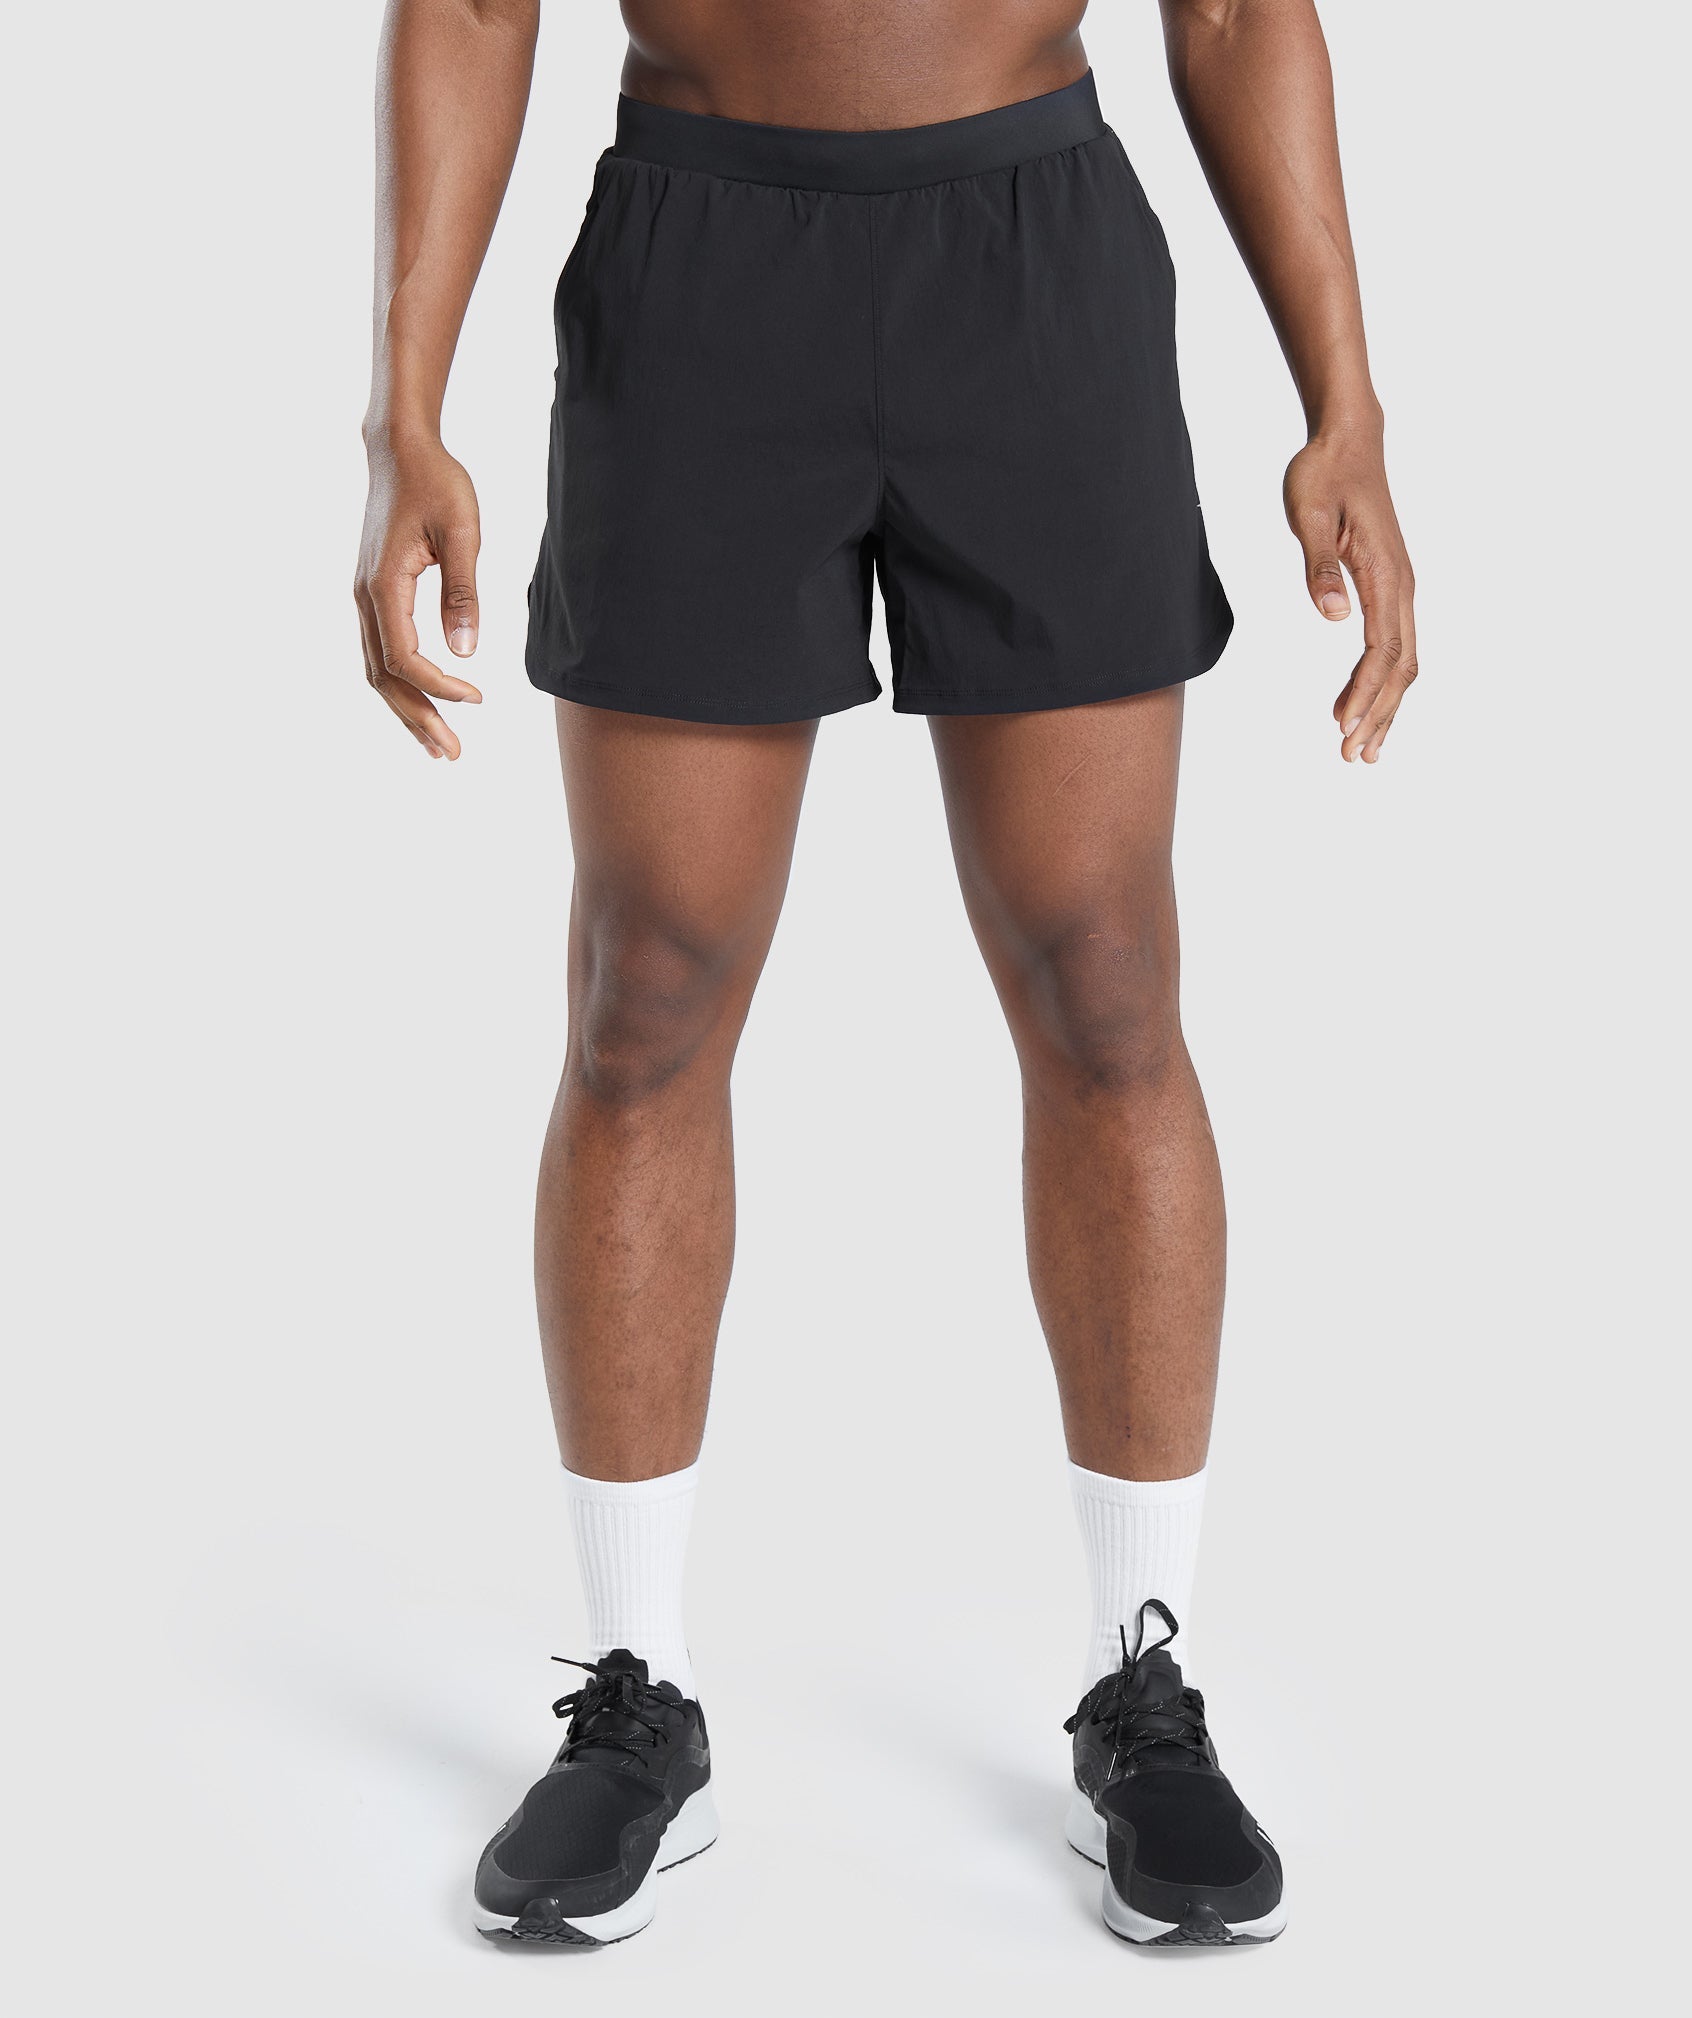 Speed Evolve 5" Shorts in Black